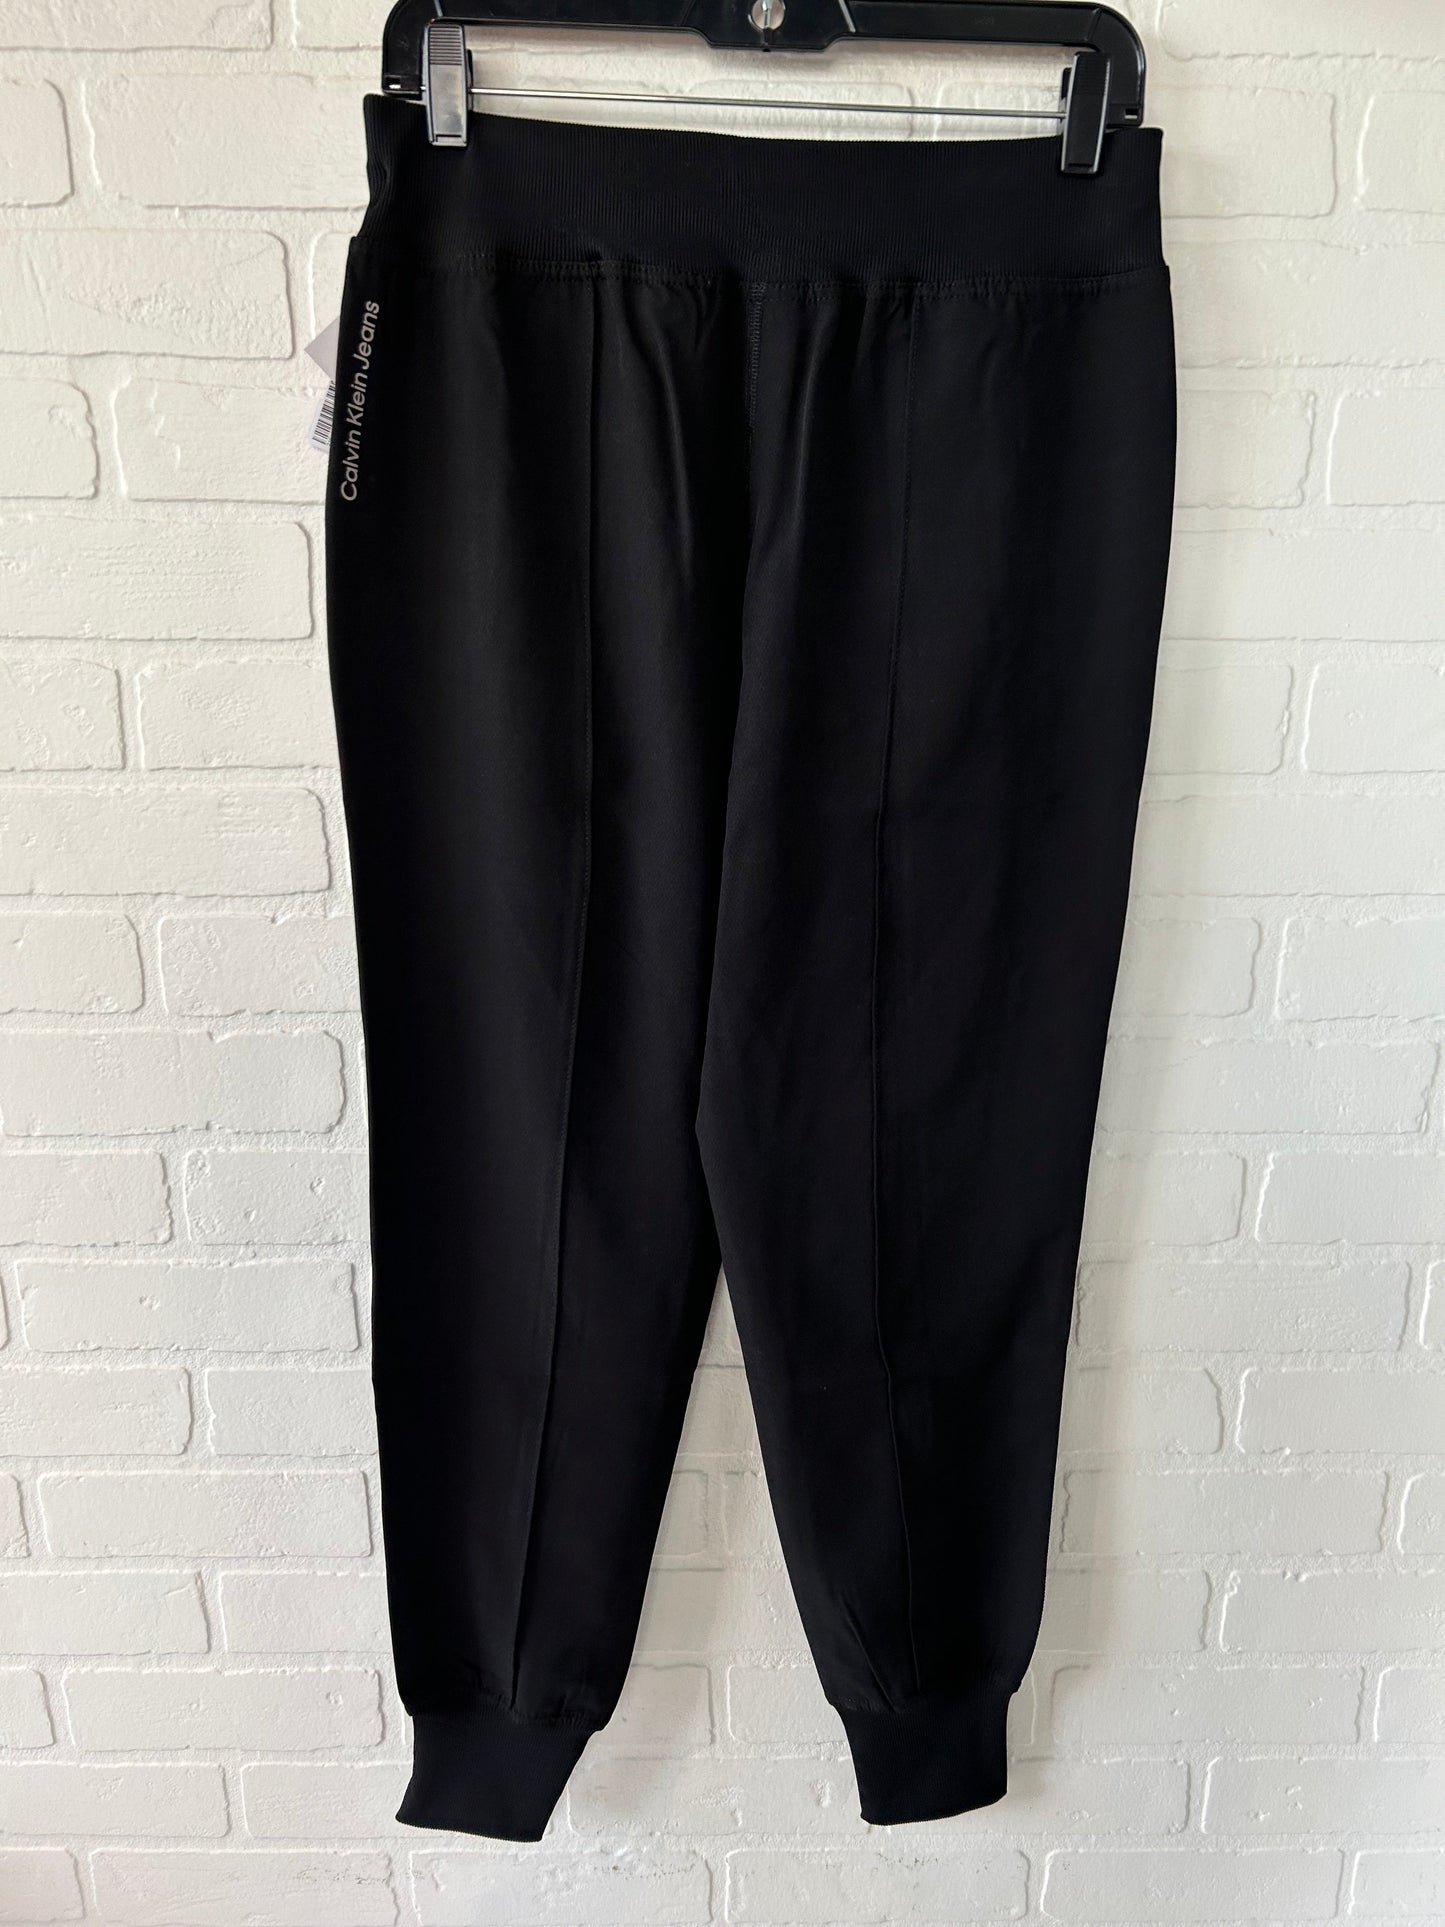 Pants Joggers By Calvin Klein  Size: 0